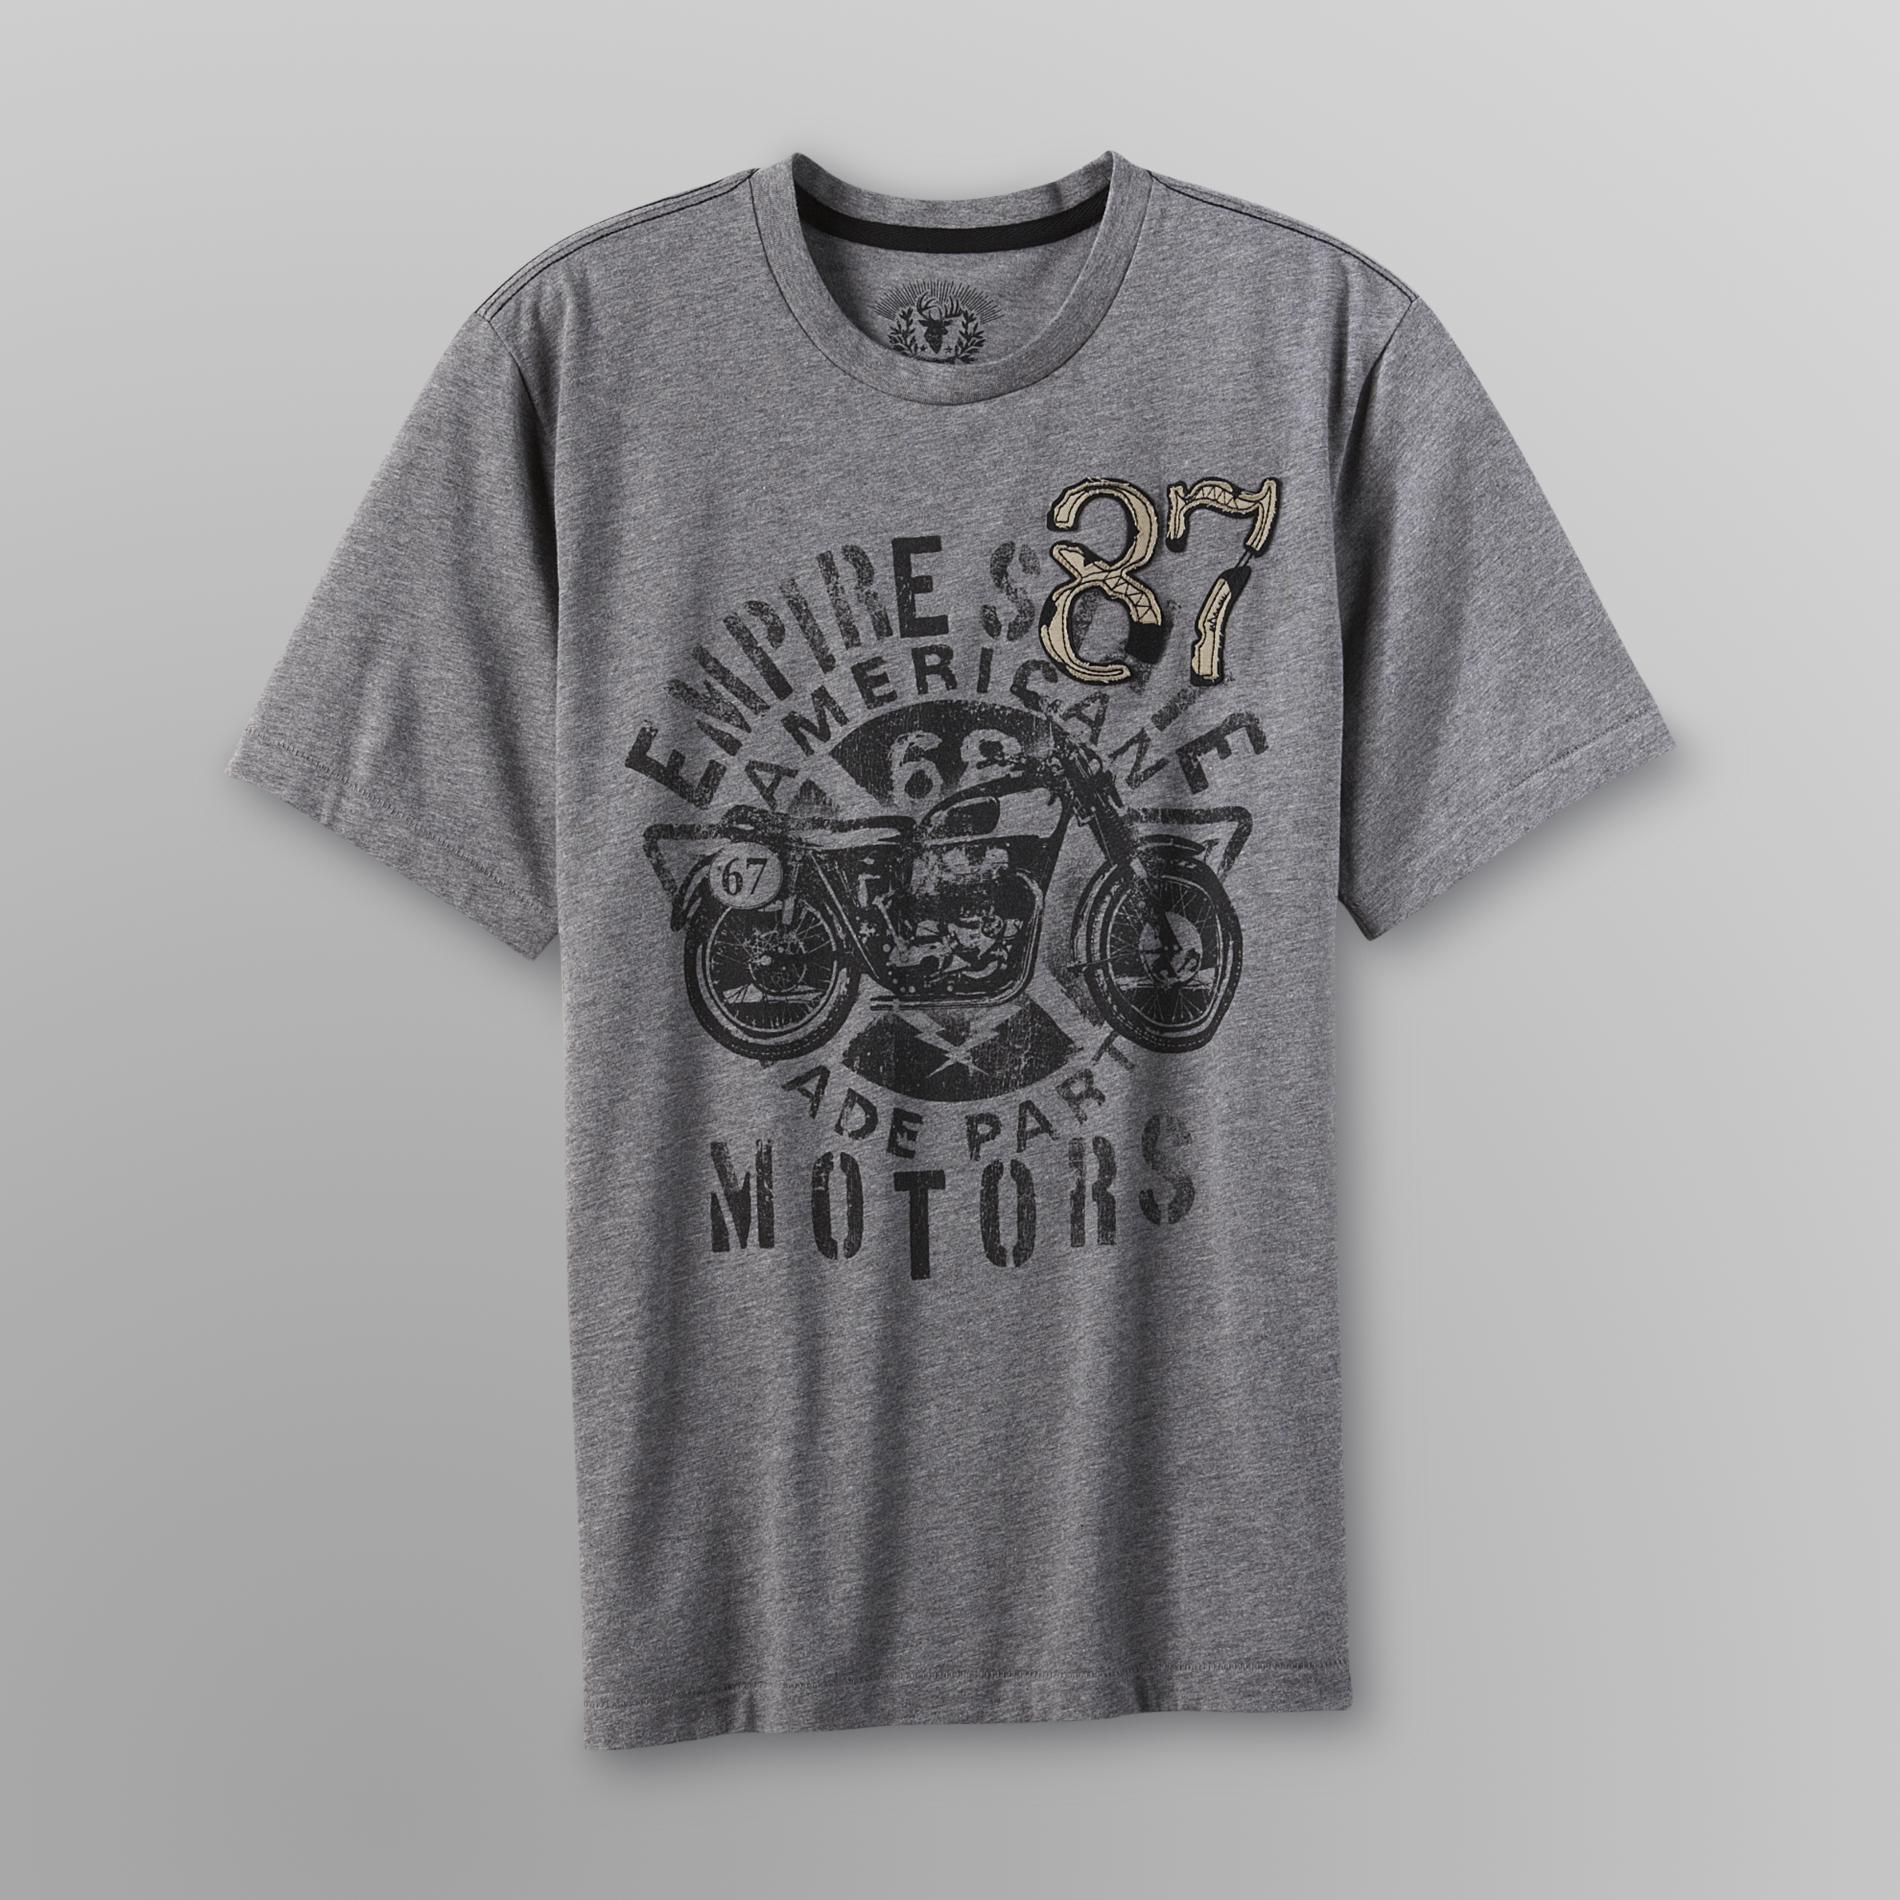 Roebuck & Co. Young Men's Patch T-Shirt - Empire Motors